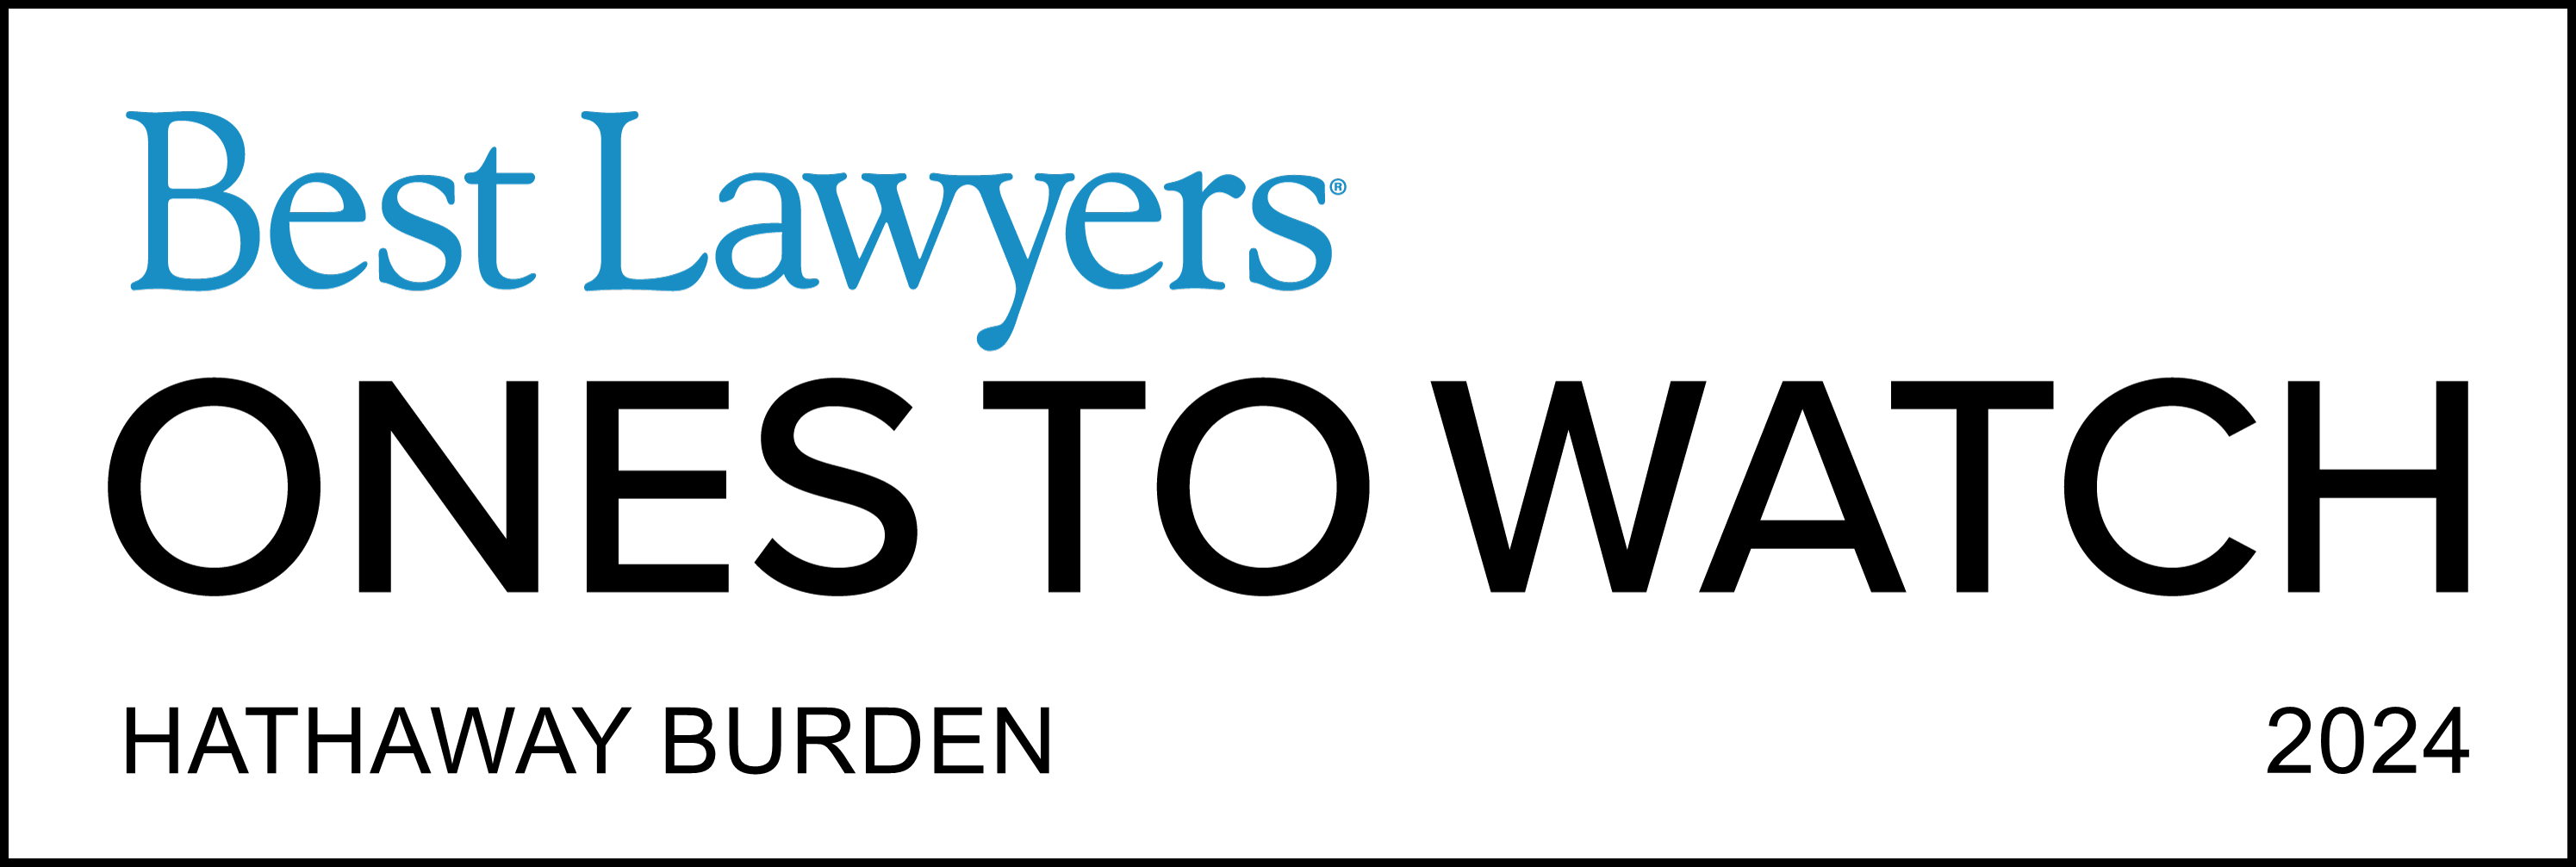 Best Lawyers - Ones to Watch 2024_Hathaway Burden